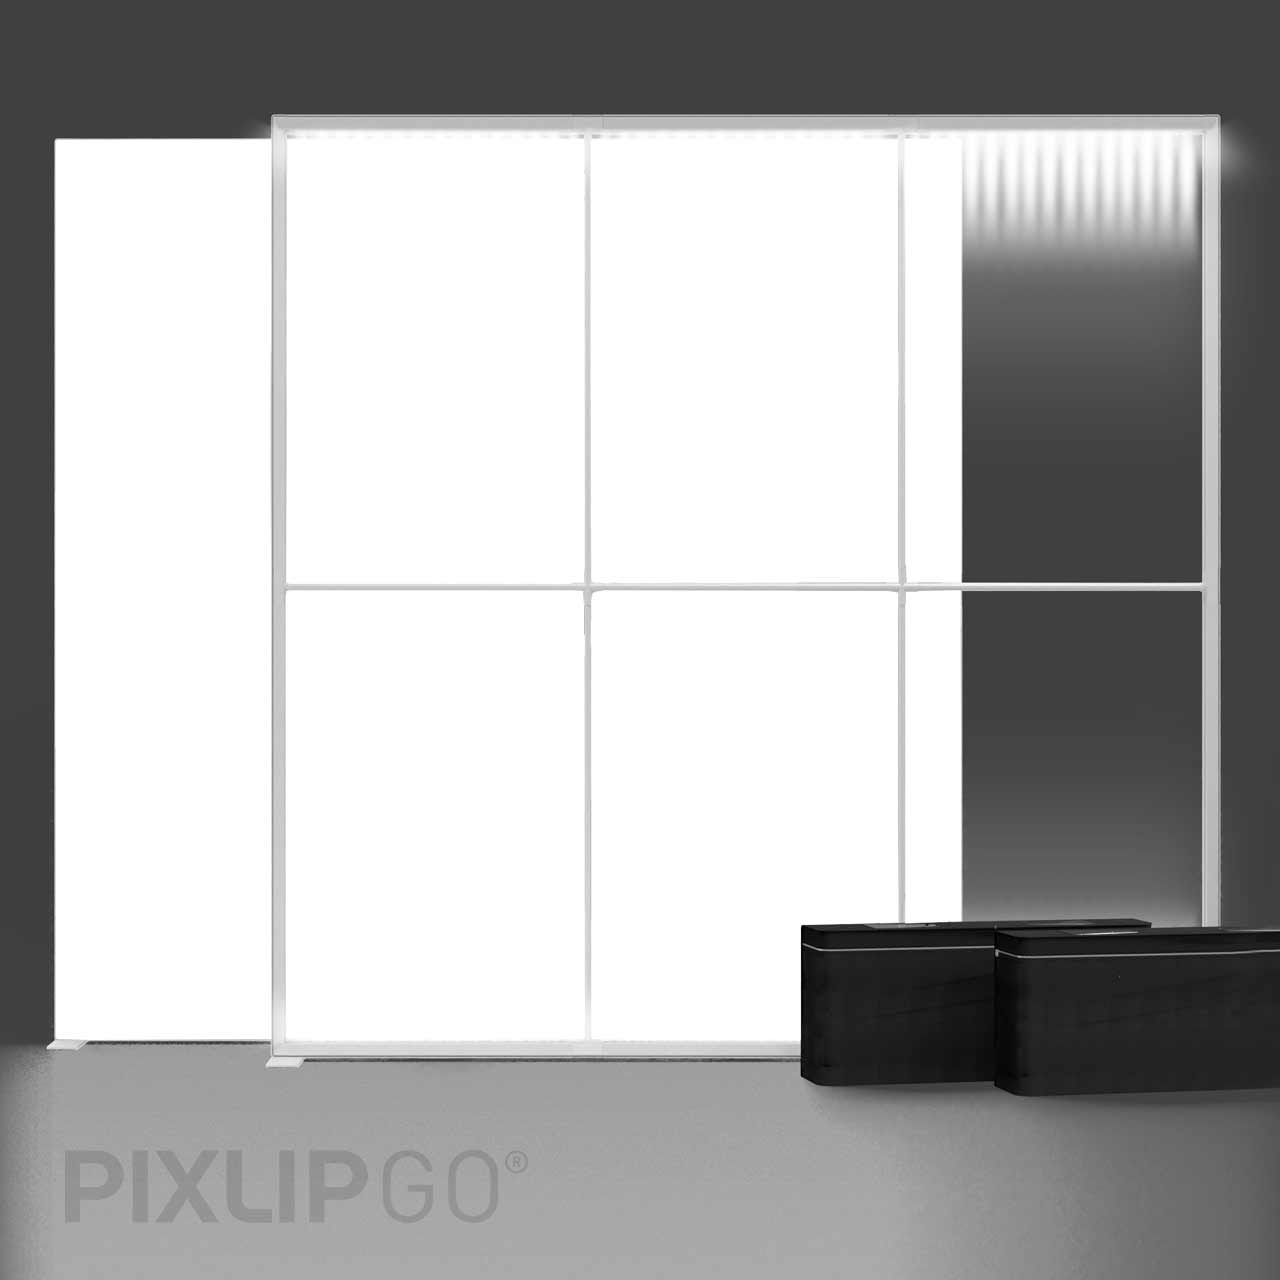 PIXLIP GO Lightbox Set 300 x 250 cm